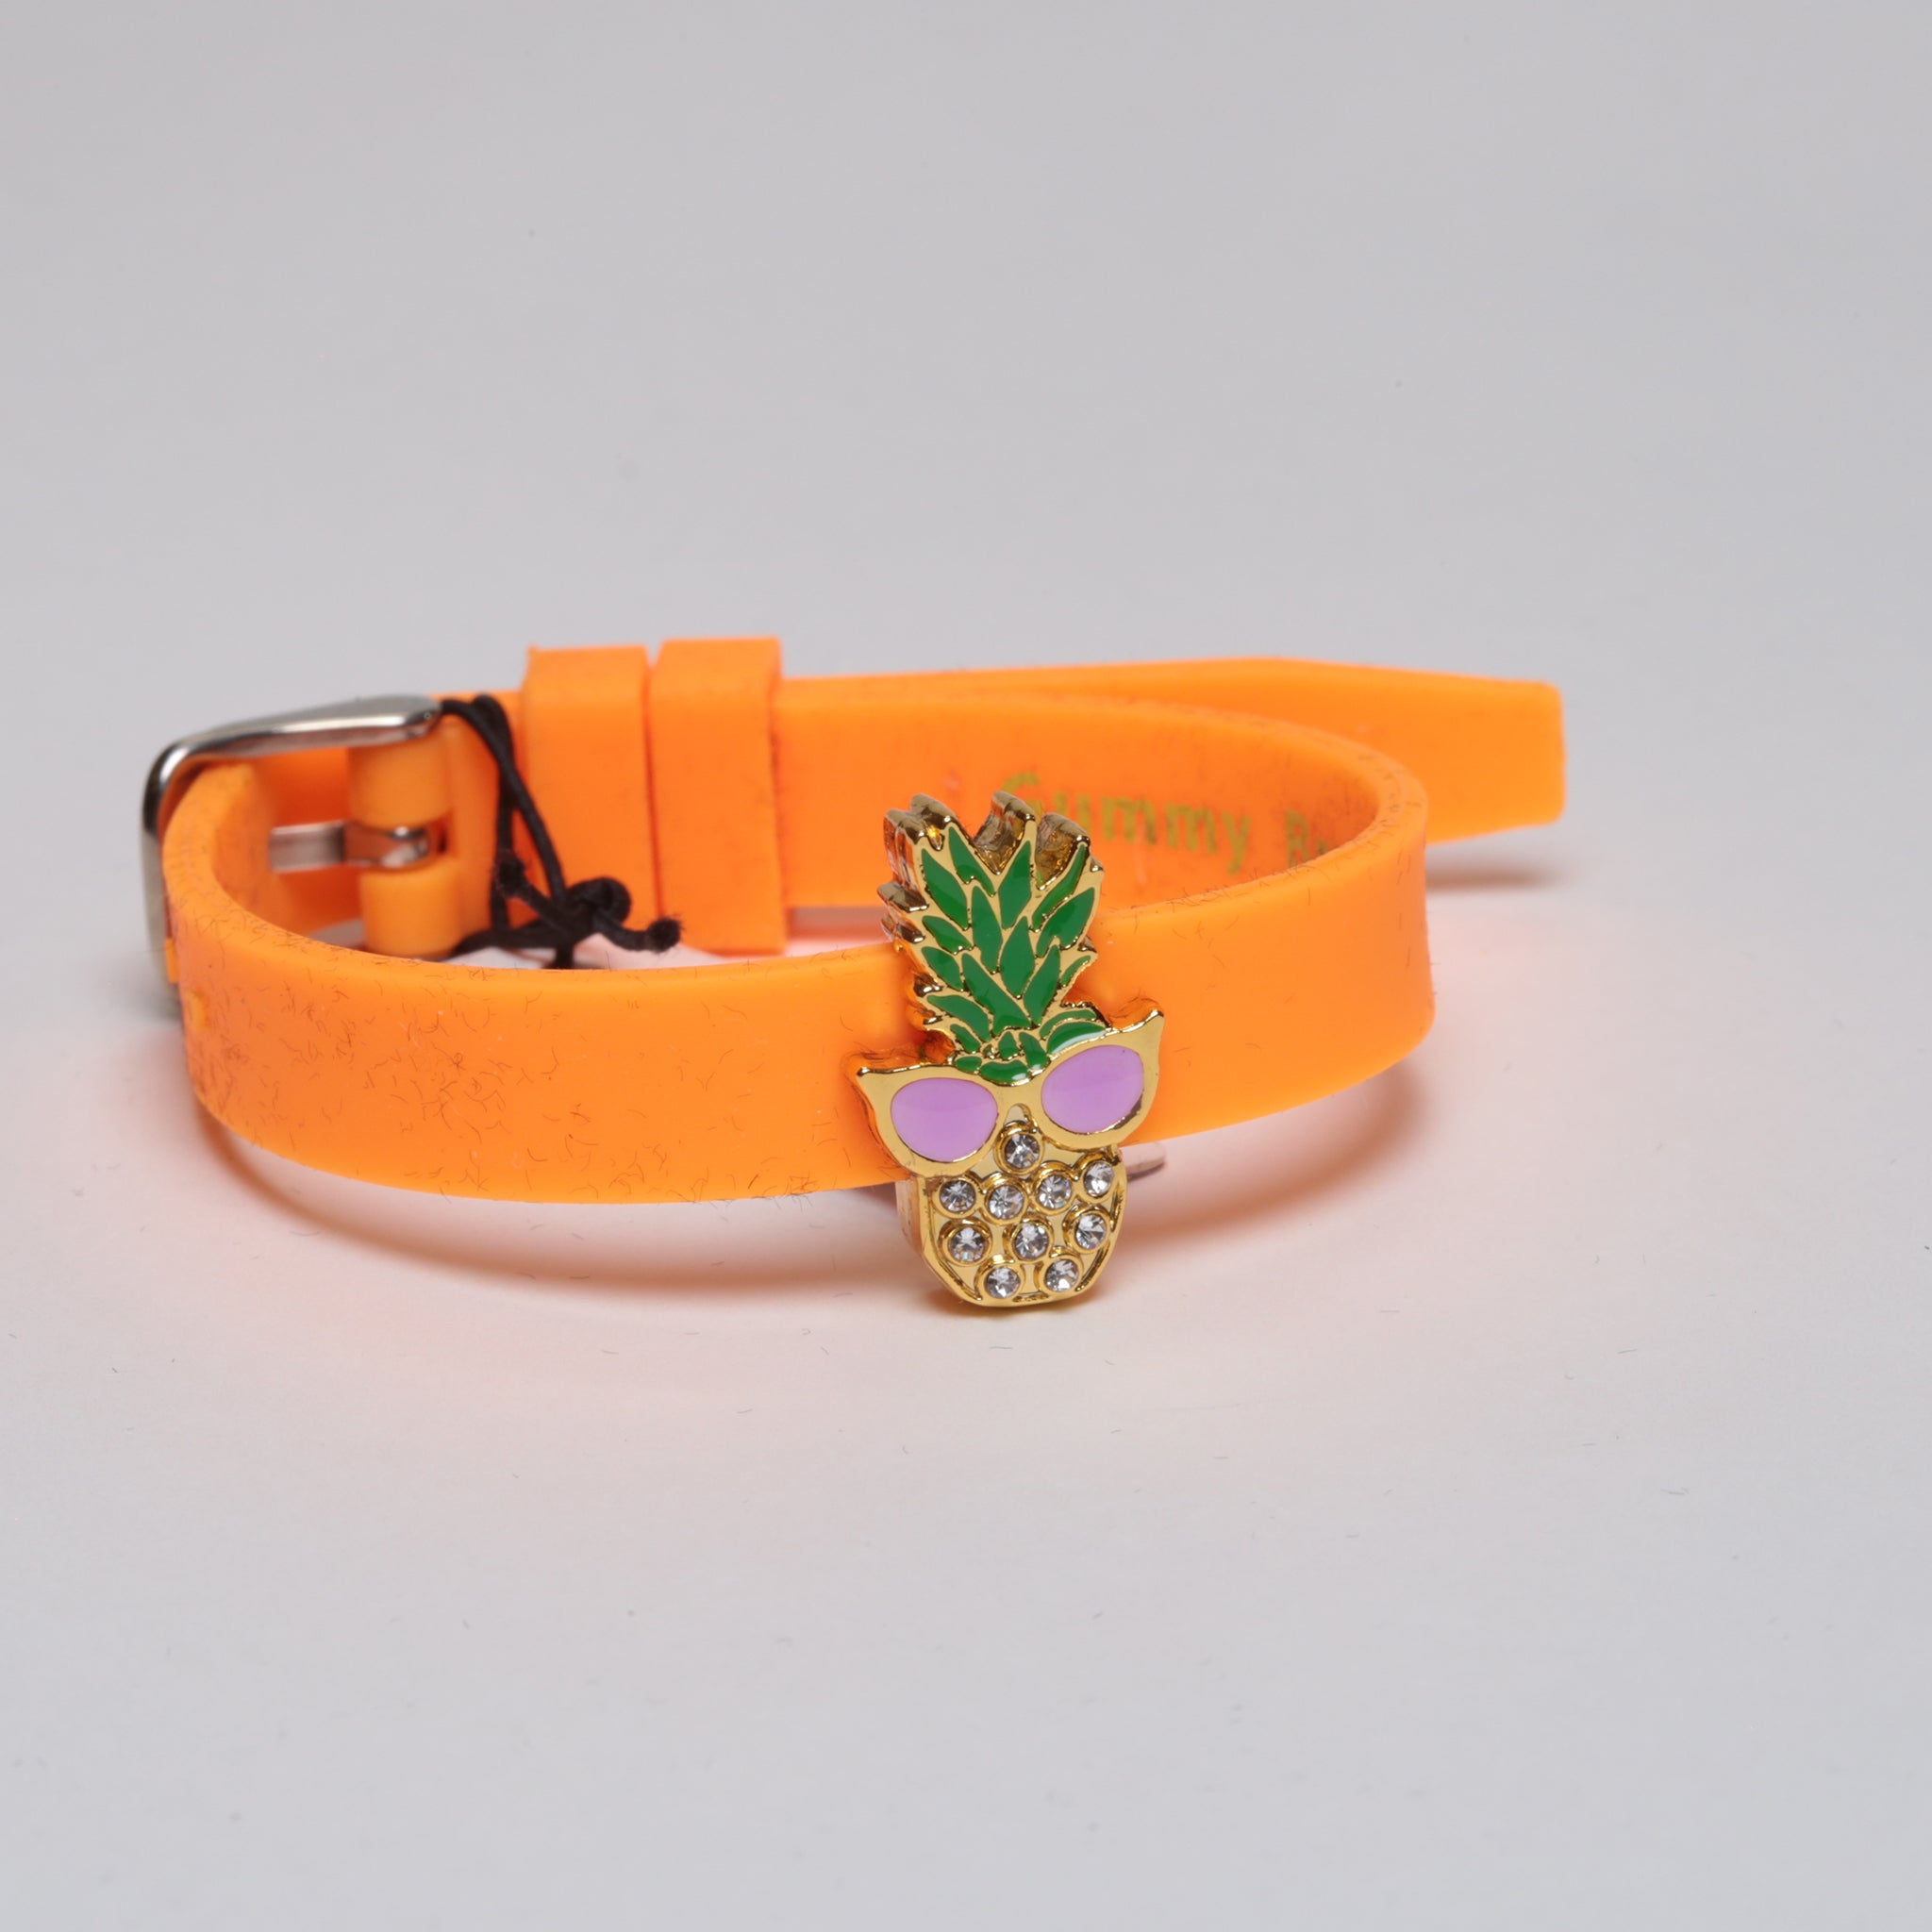 Embellished Pineapple with Sunglasses Charm Bracelet